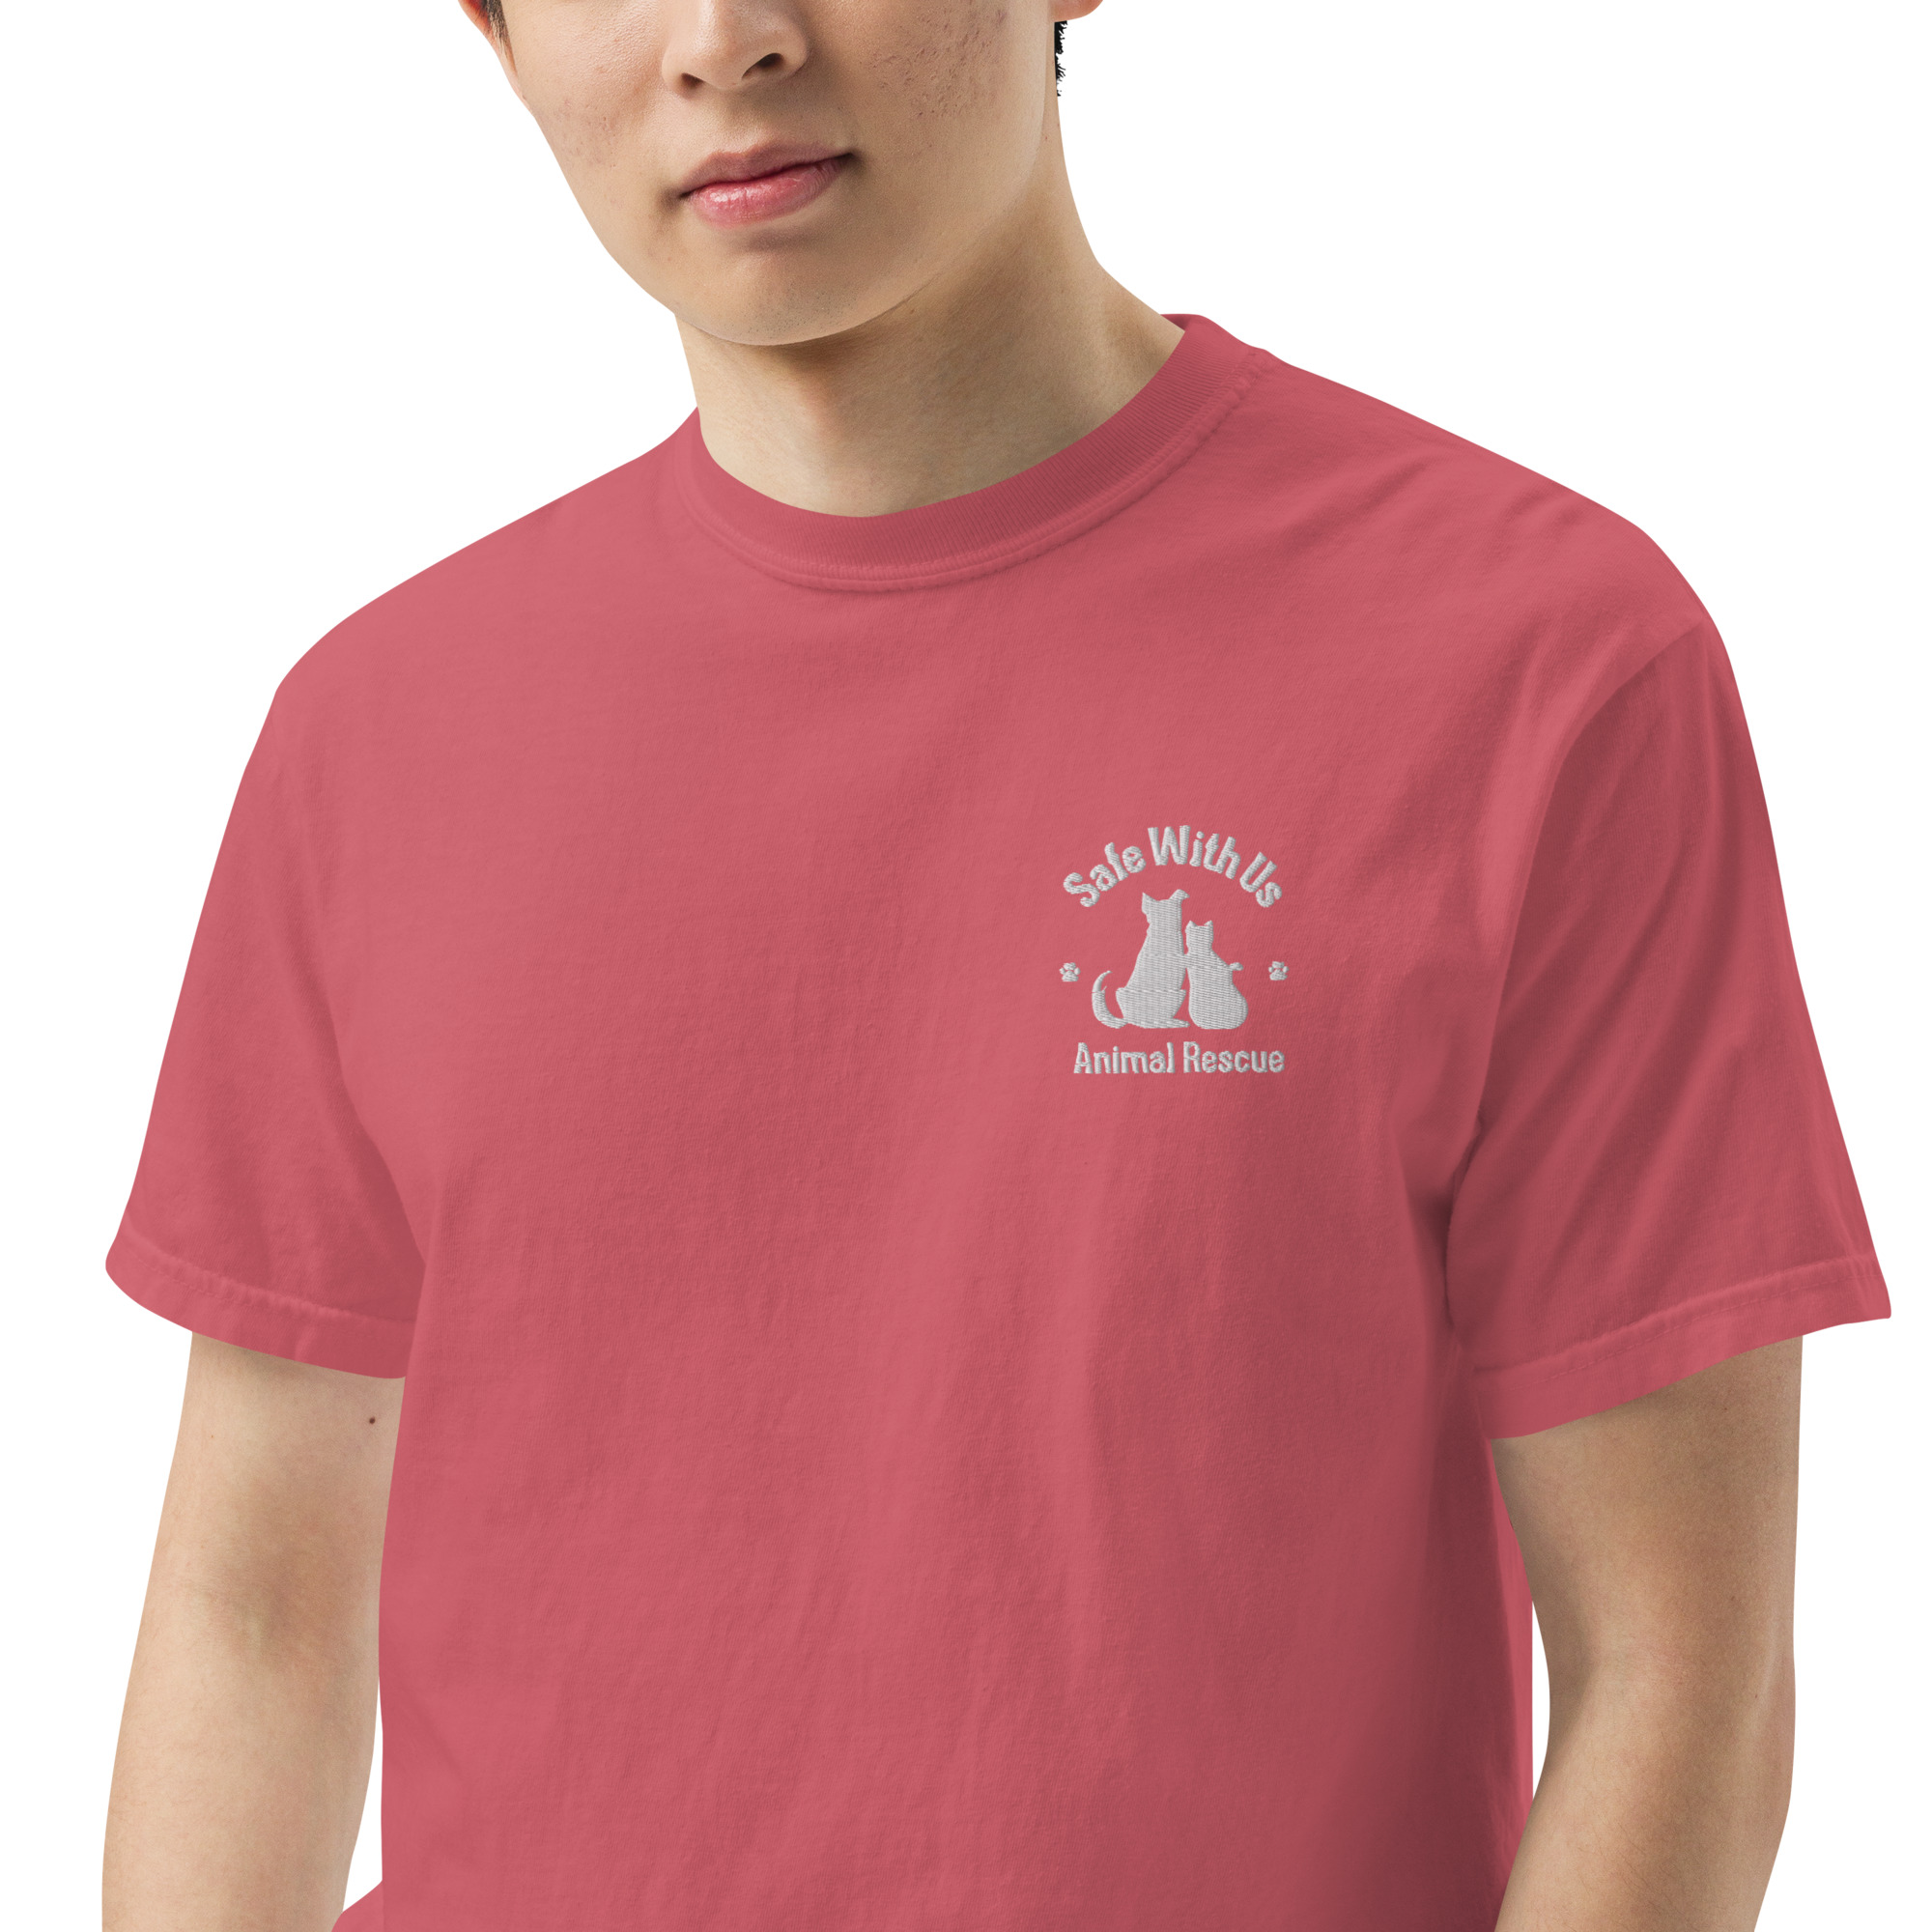 mens-garment-dyed-heavyweight-t-shirt-watermelon-zoomed-in-3-6415fedc2b3ad.jpg